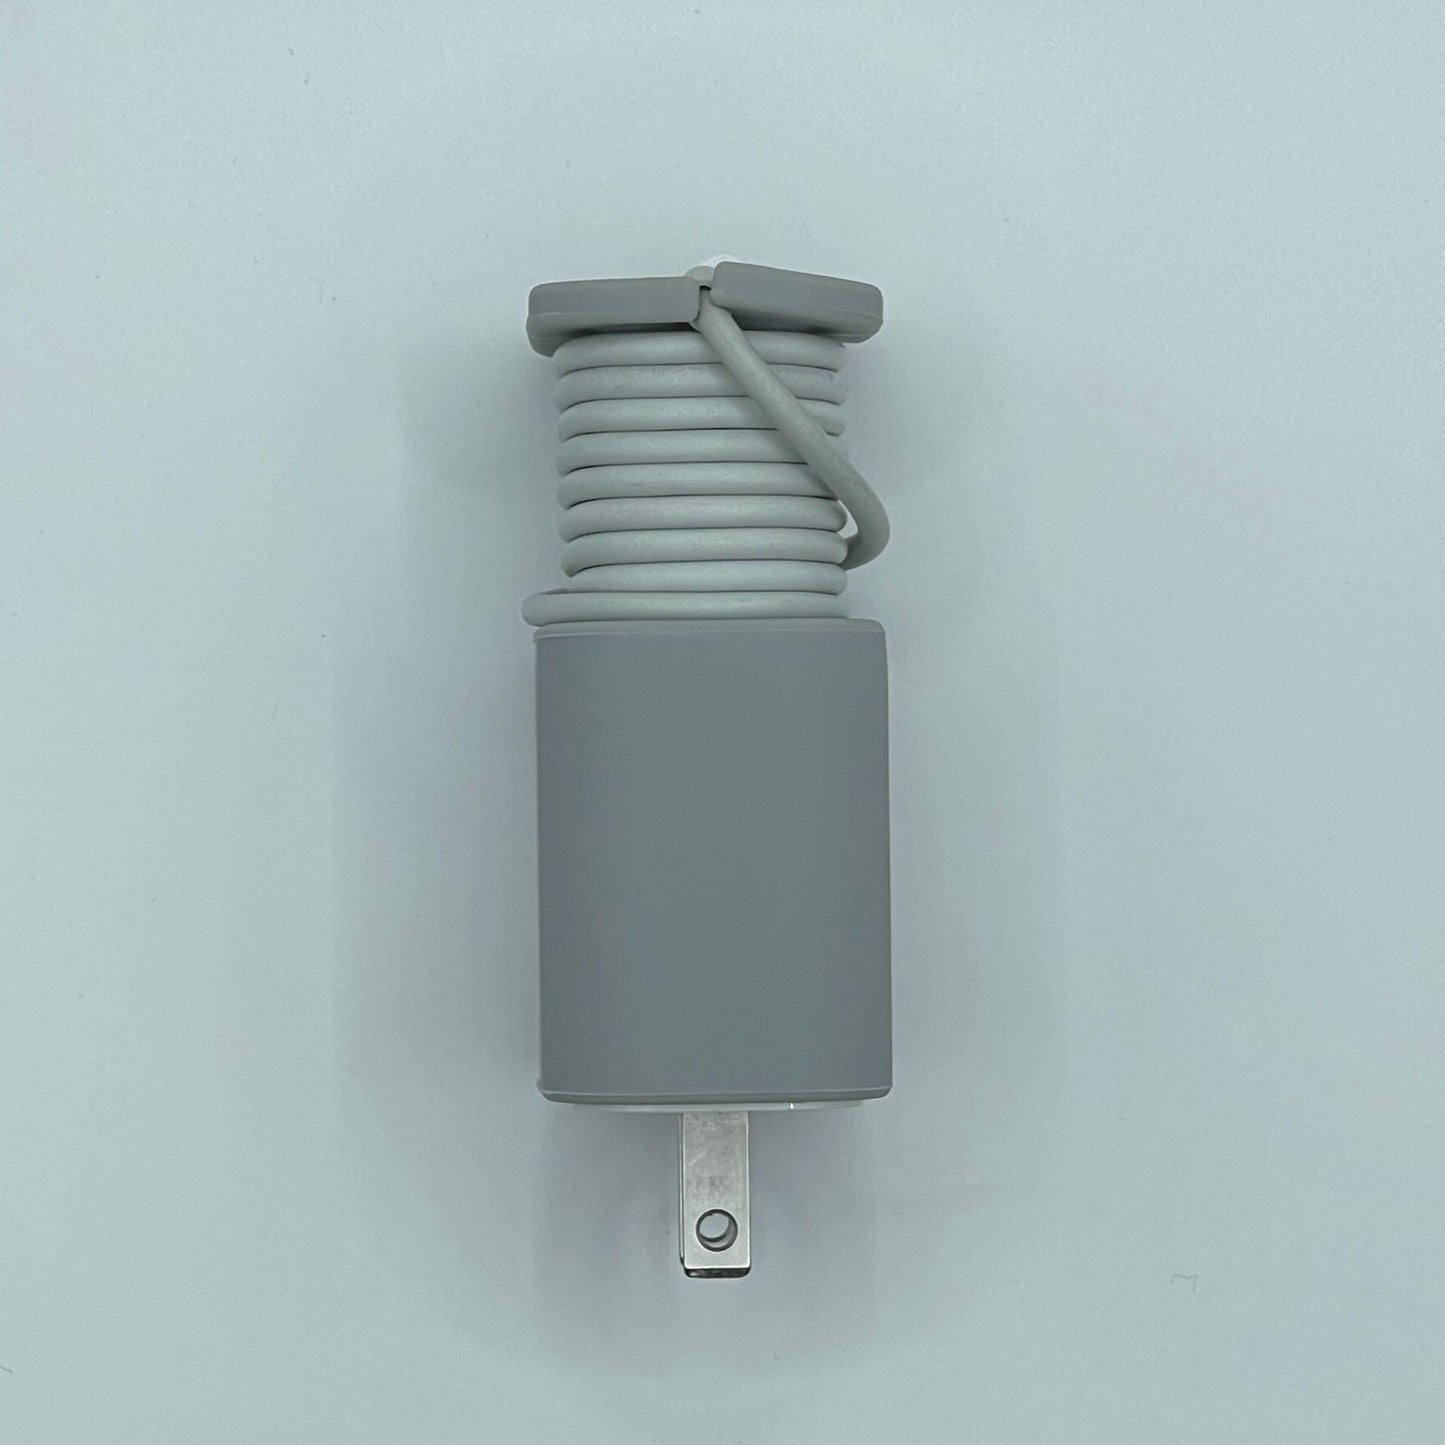 Apple Power Adapter Case